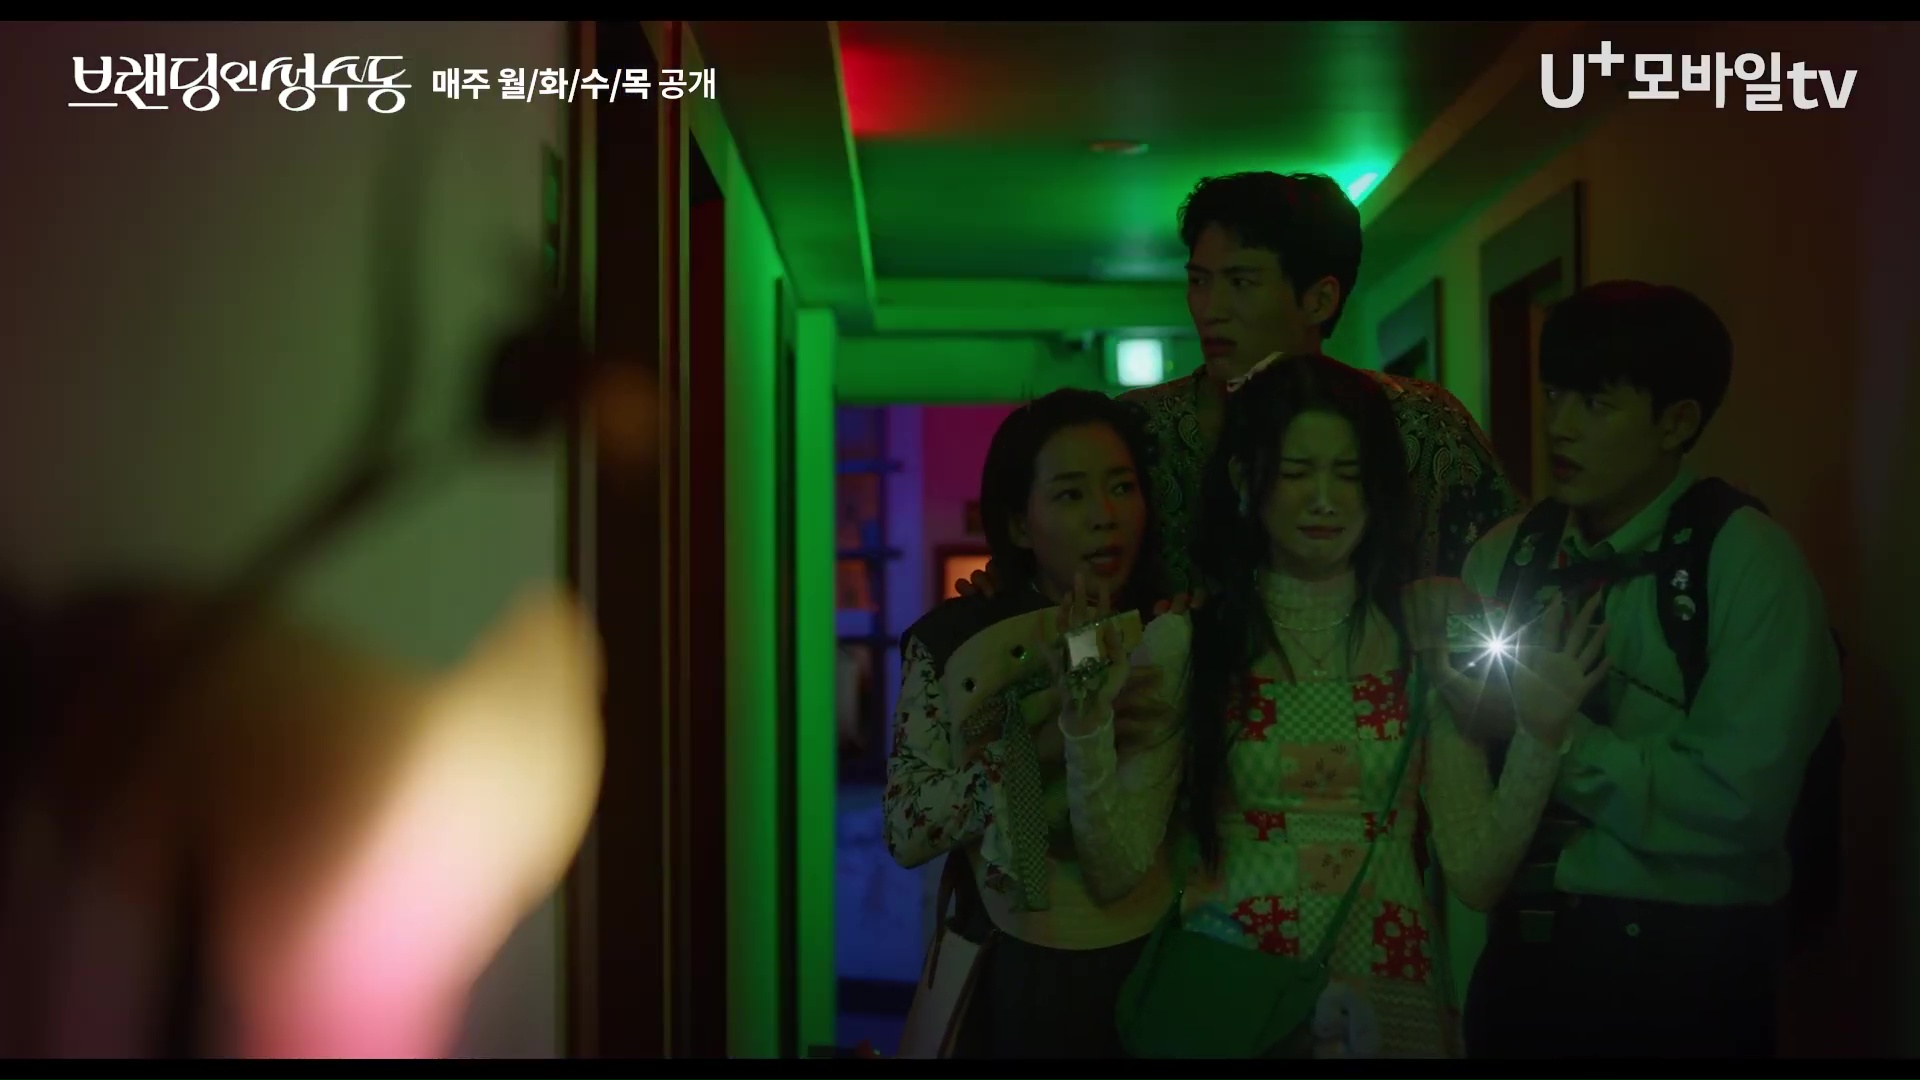 4 Chaotic Moments For Kim Ji Eun & Lomon In Episodes 13-16 Of “Branding In Seongsu”